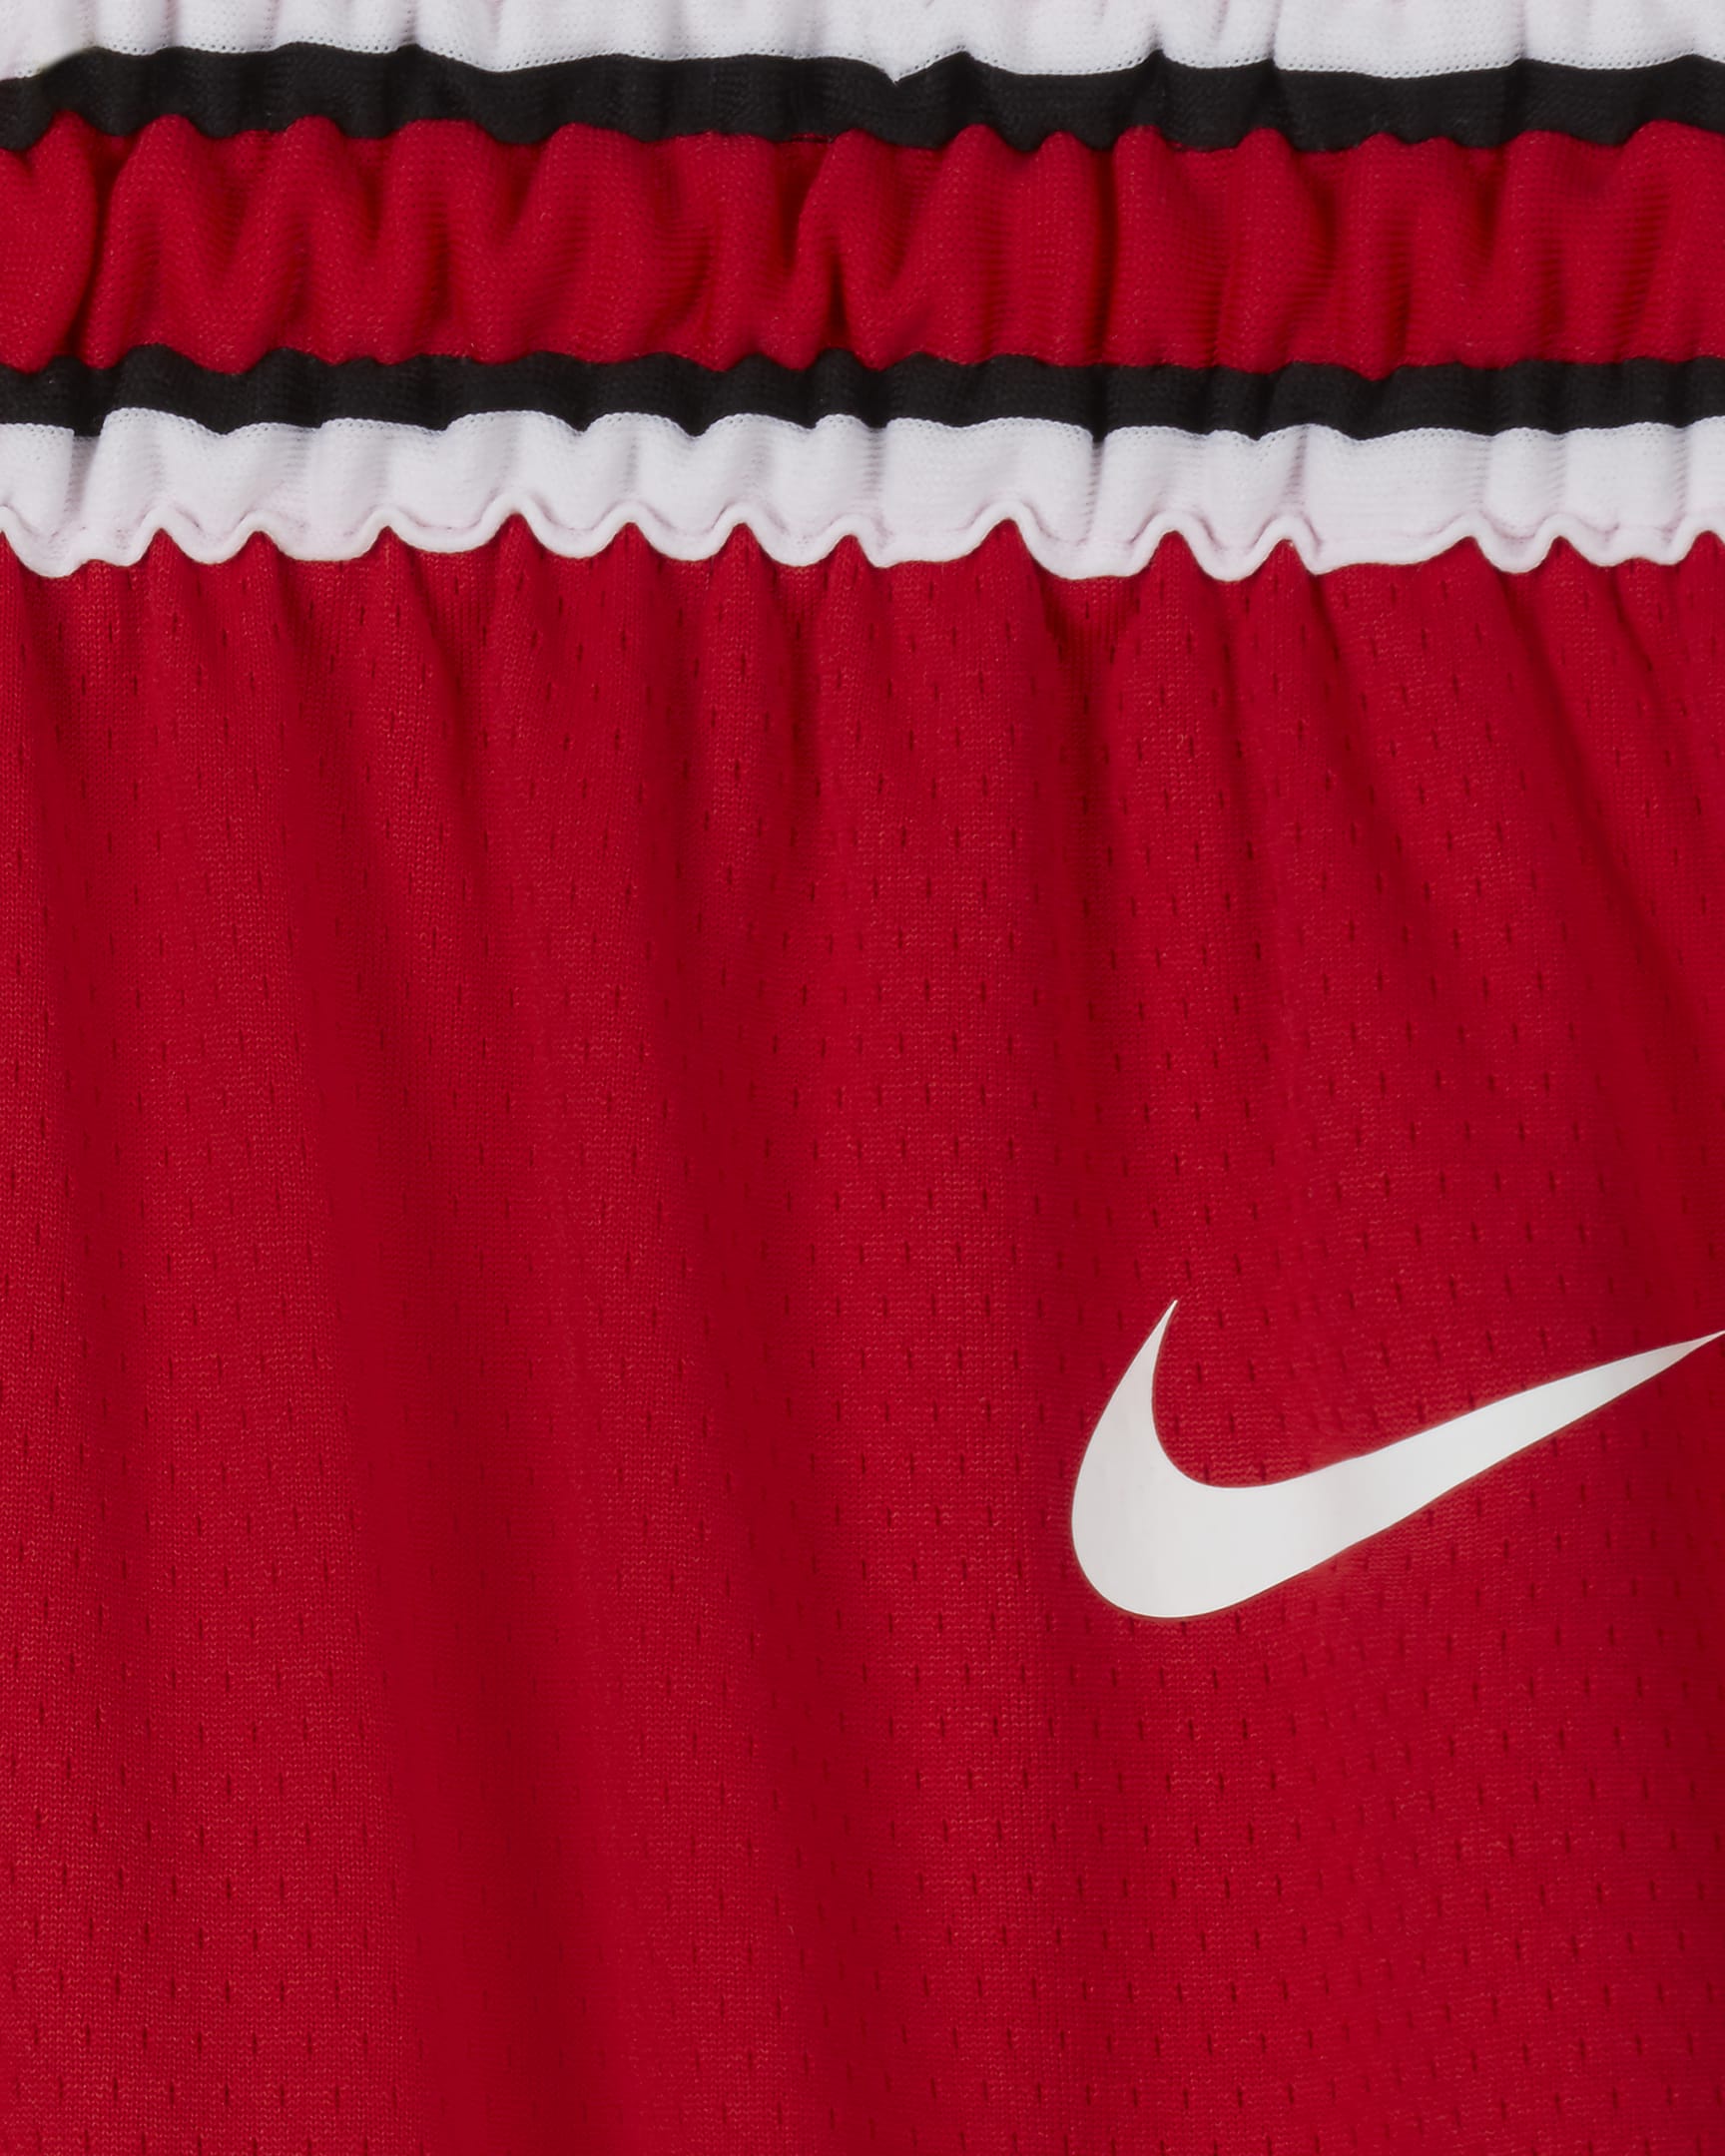 Chicago Bulls Icon Edition Men's Nike NBA Swingman Shorts - University Red/White/White